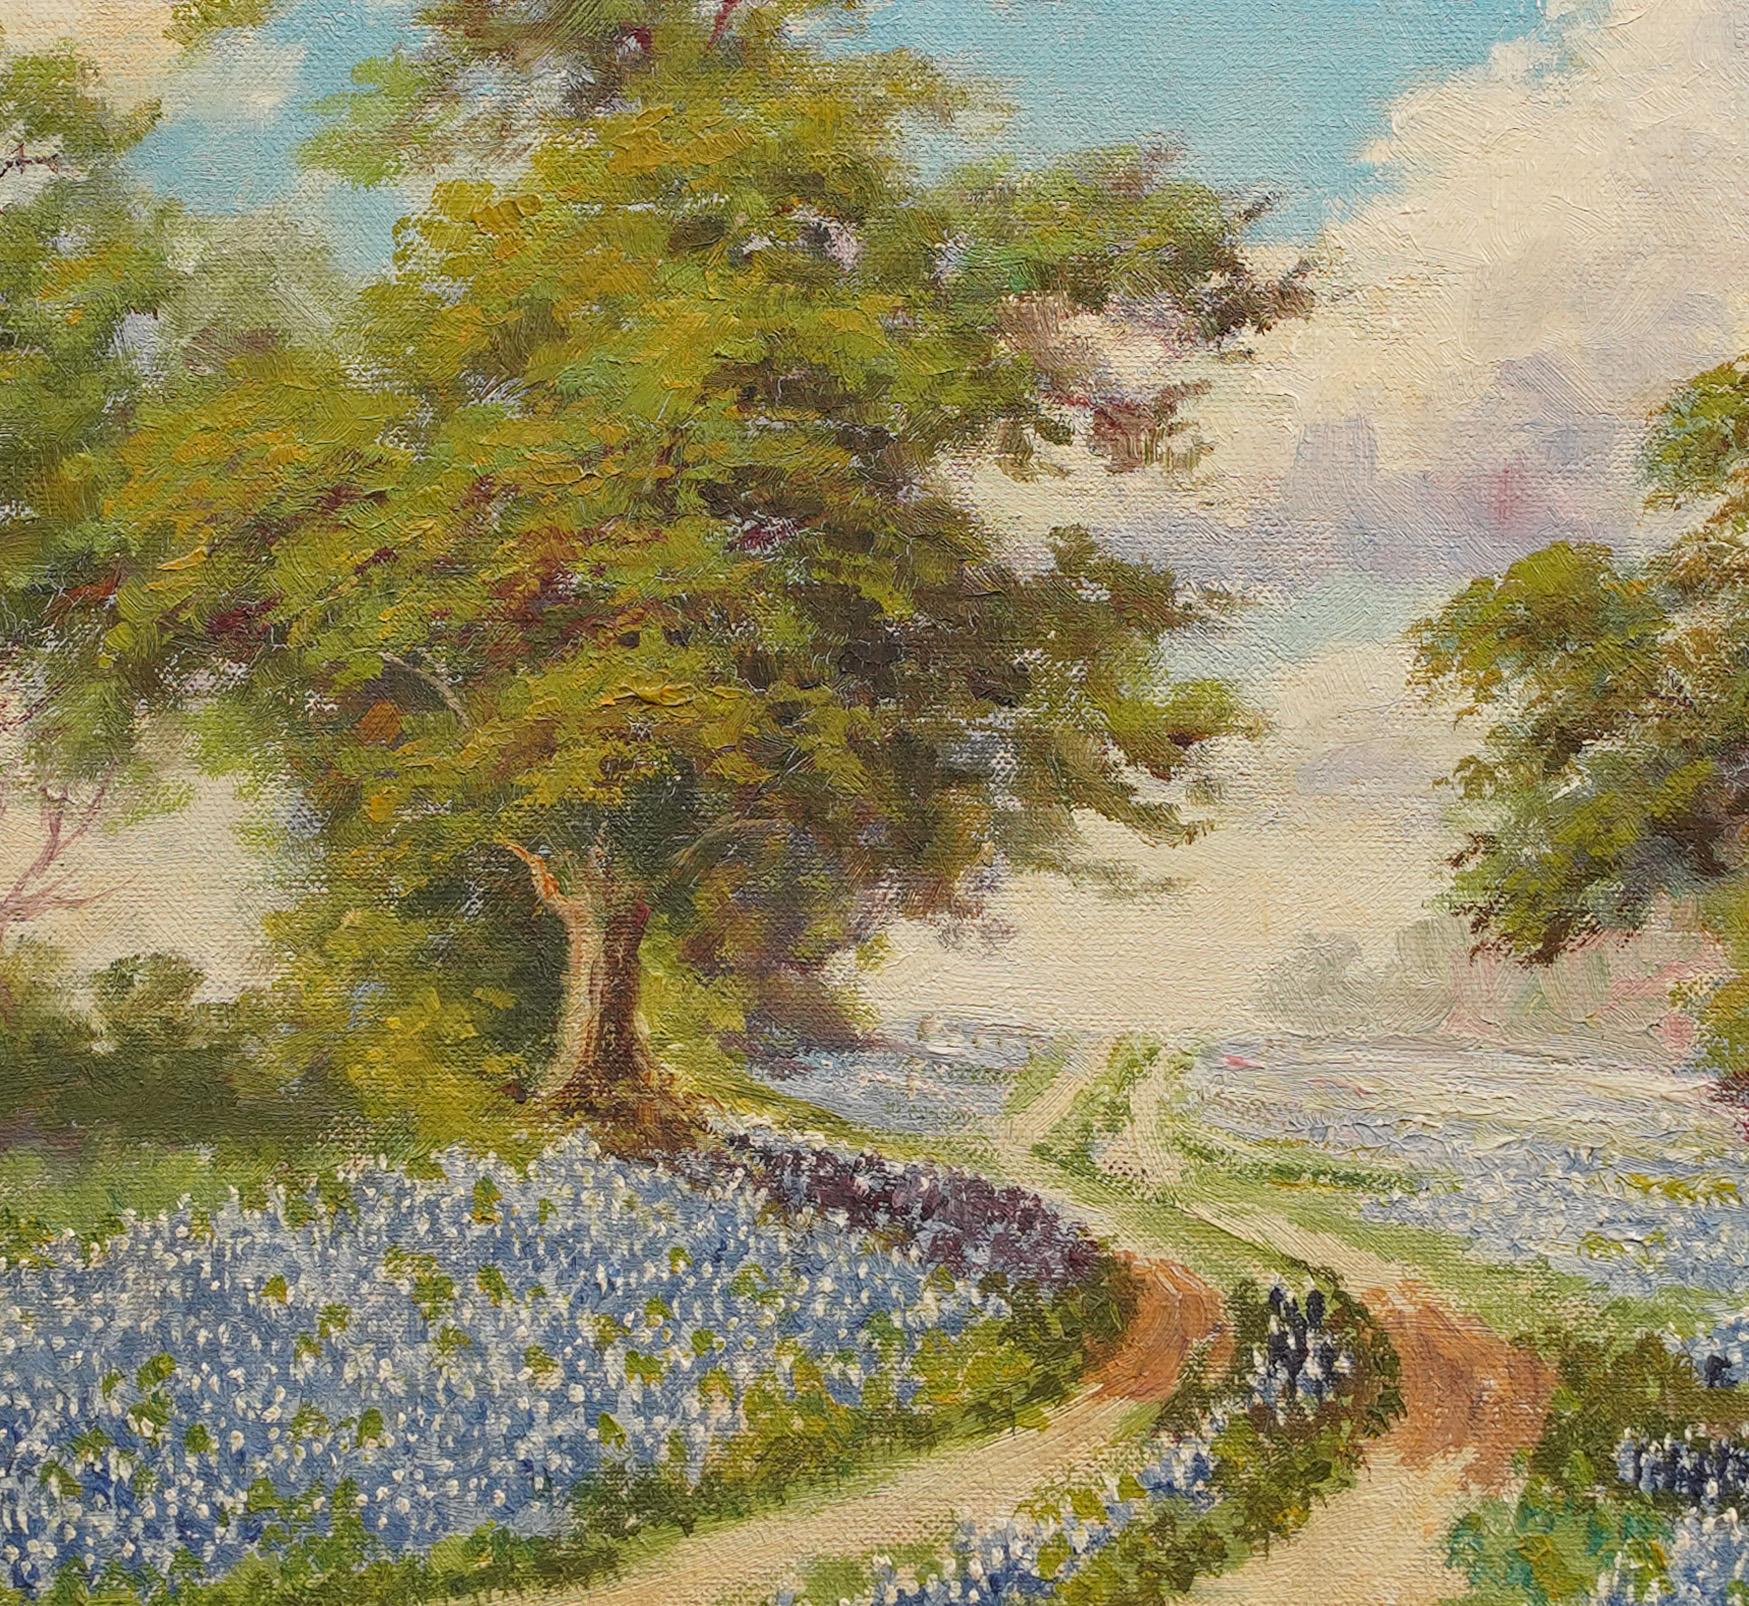 Antique American Framed Texas Bluebonnet Landscape Framed Signed Early Painting For Sale 2